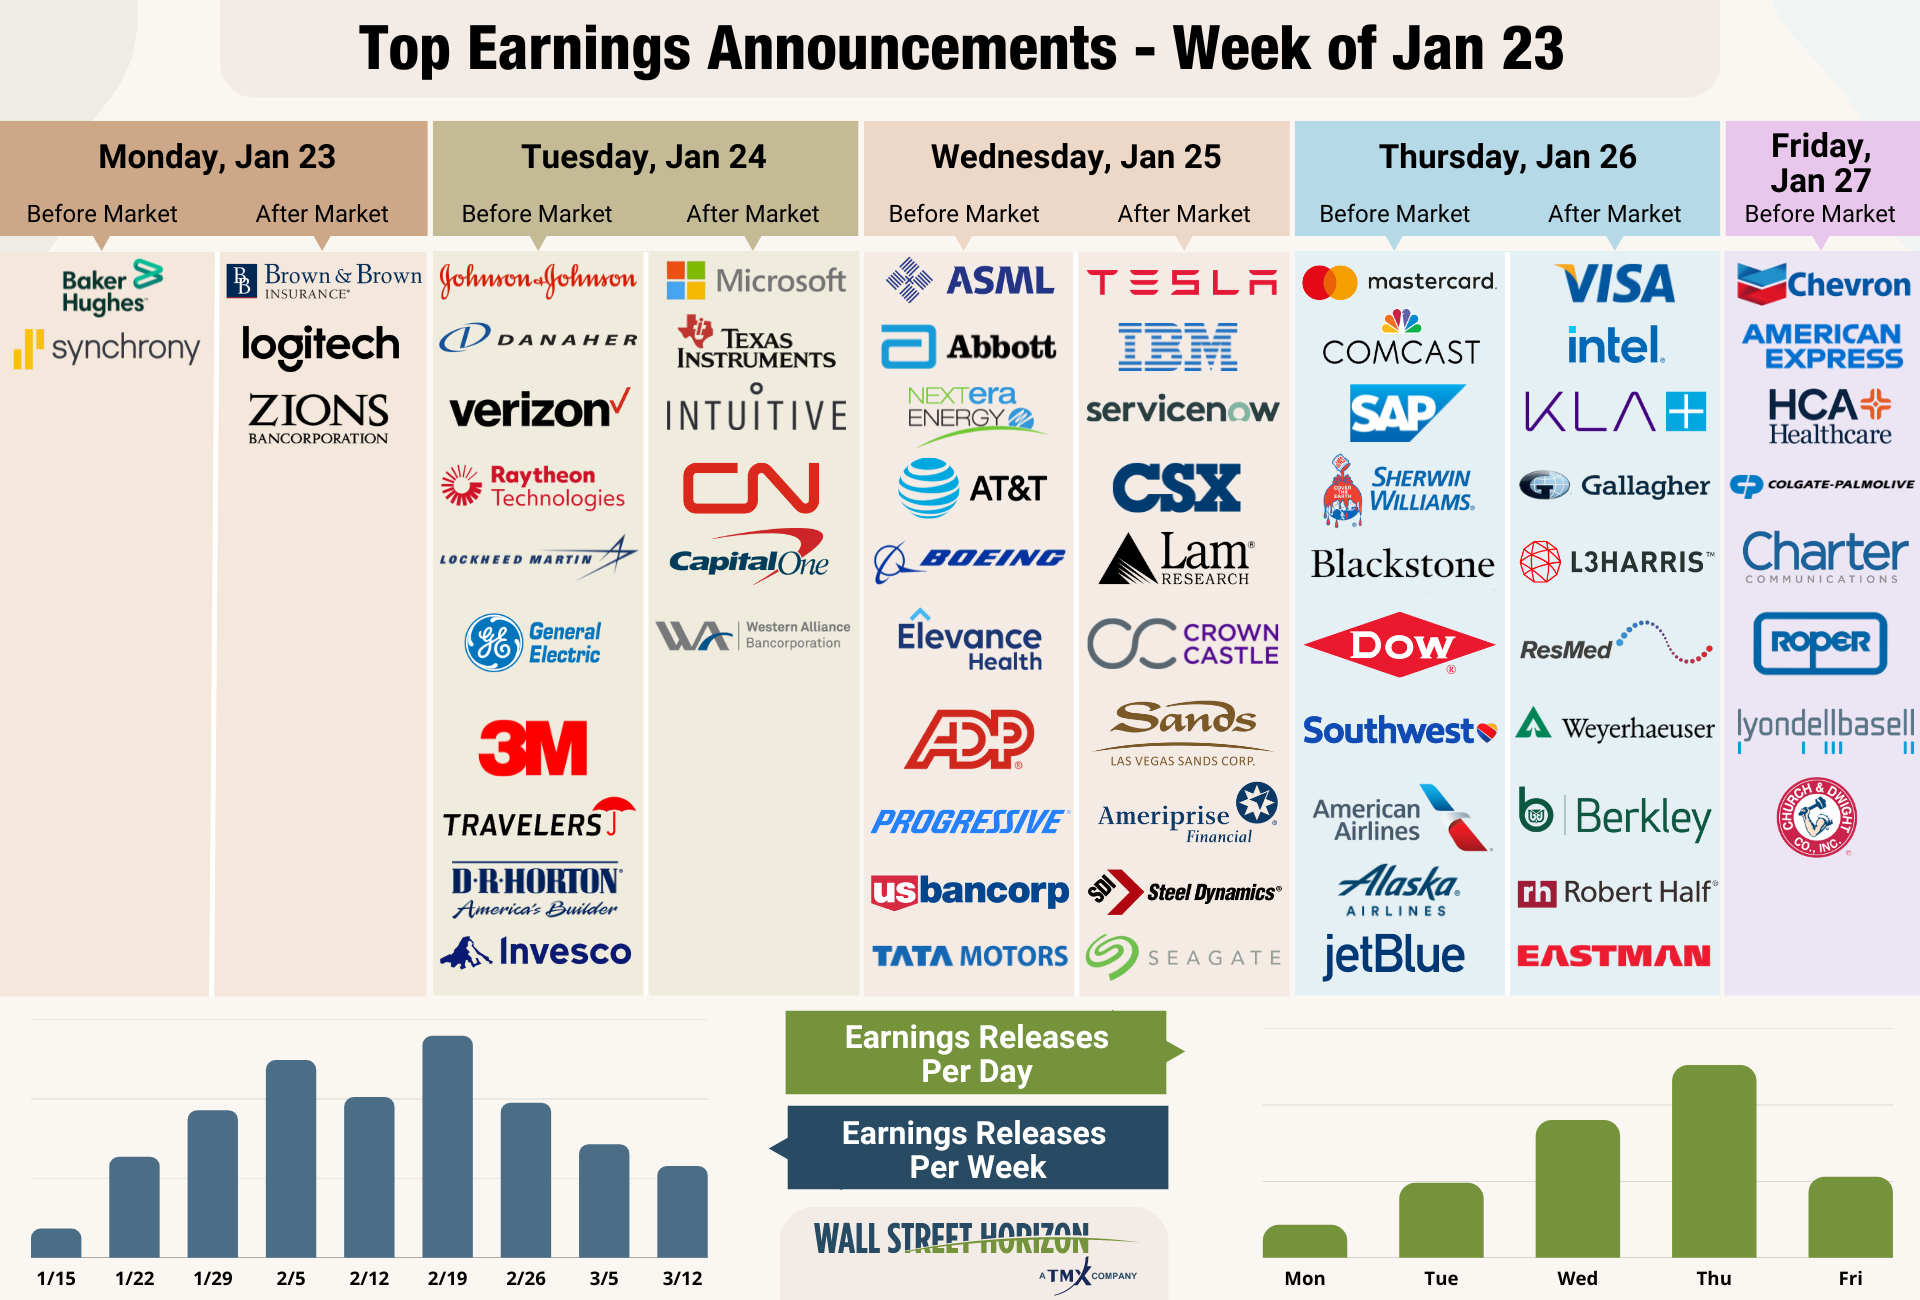 This Week's Top Earnings Announcements